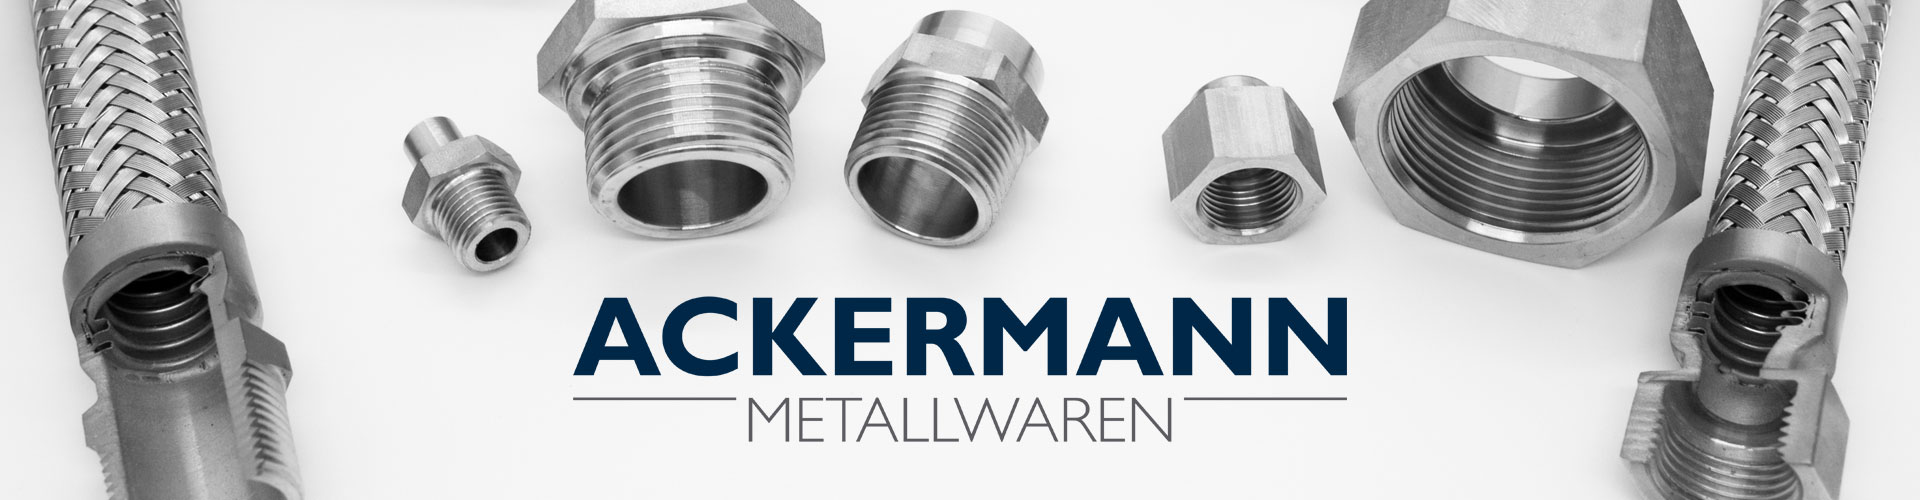 Ackermann Metallwaren GmbH products